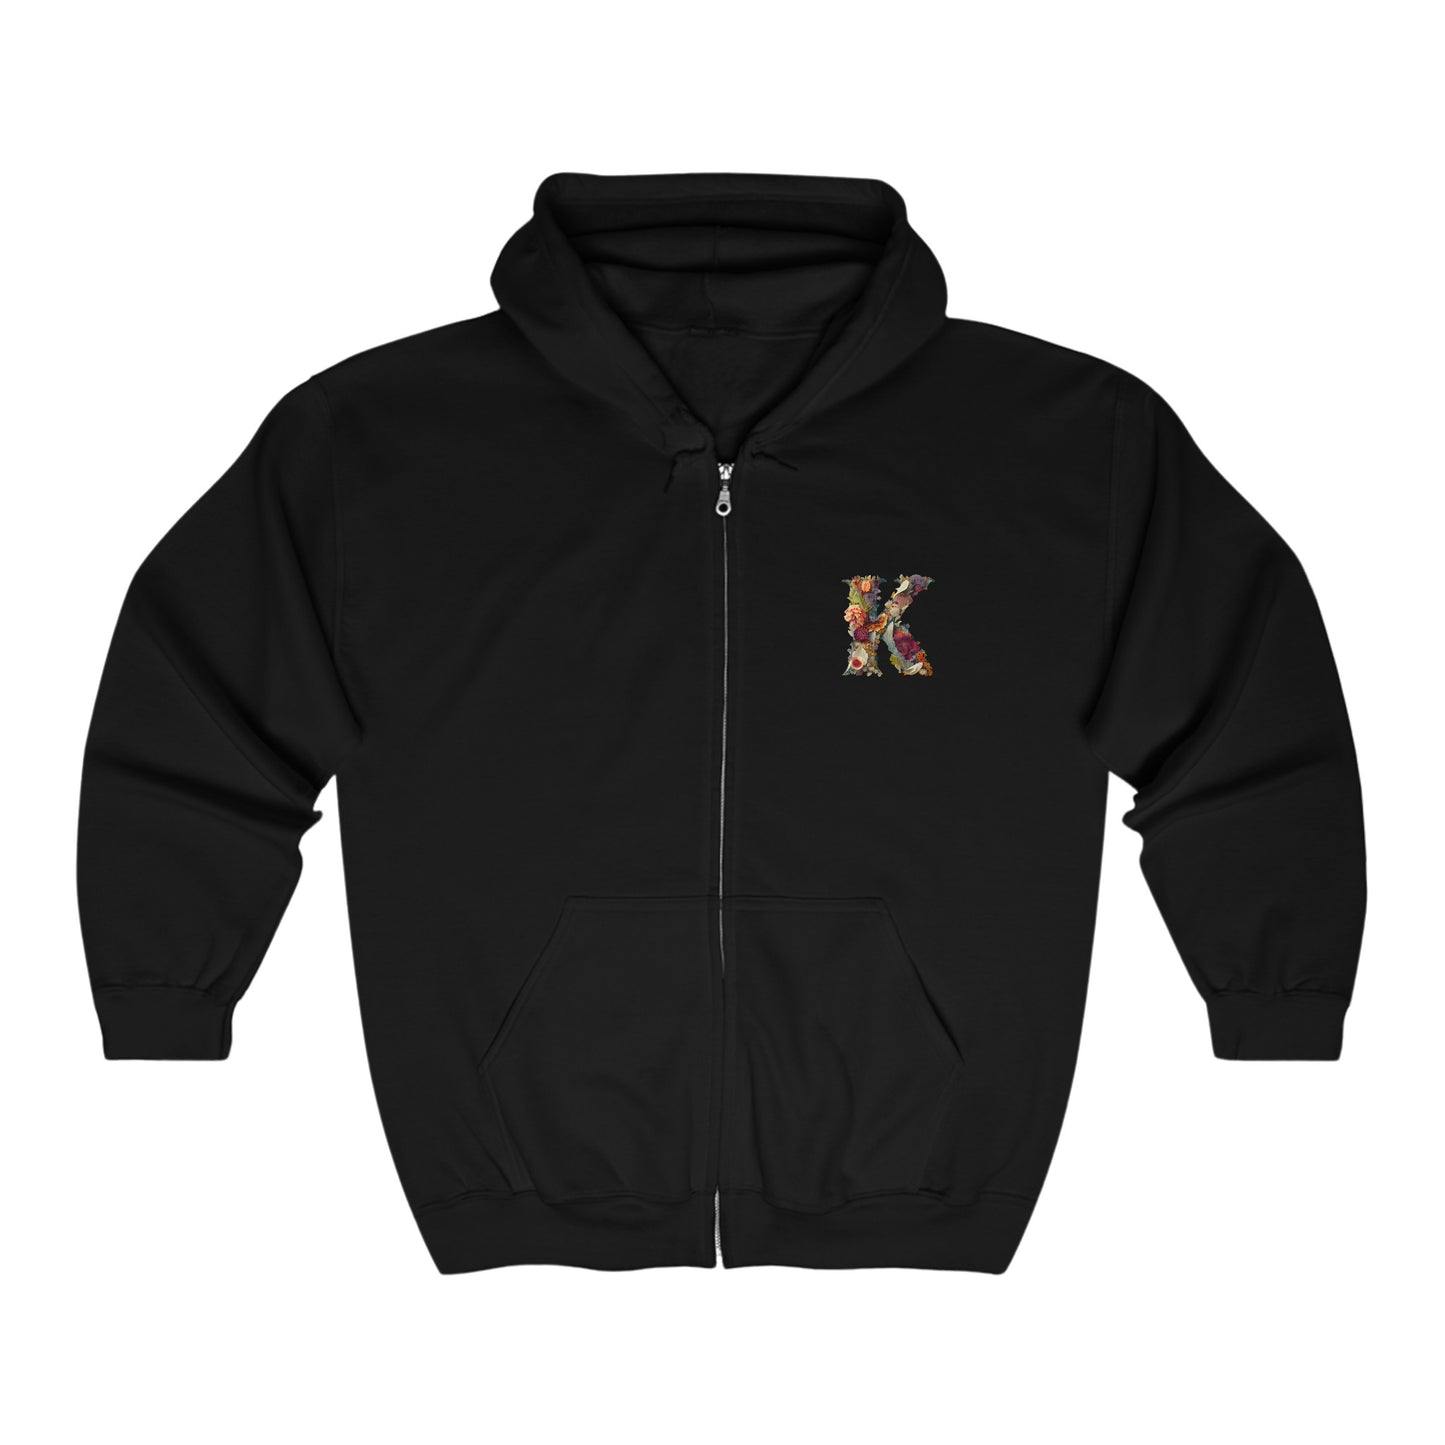 Unisex Heavy Blend™ Full Zip Hooded Sweatshirt "K"